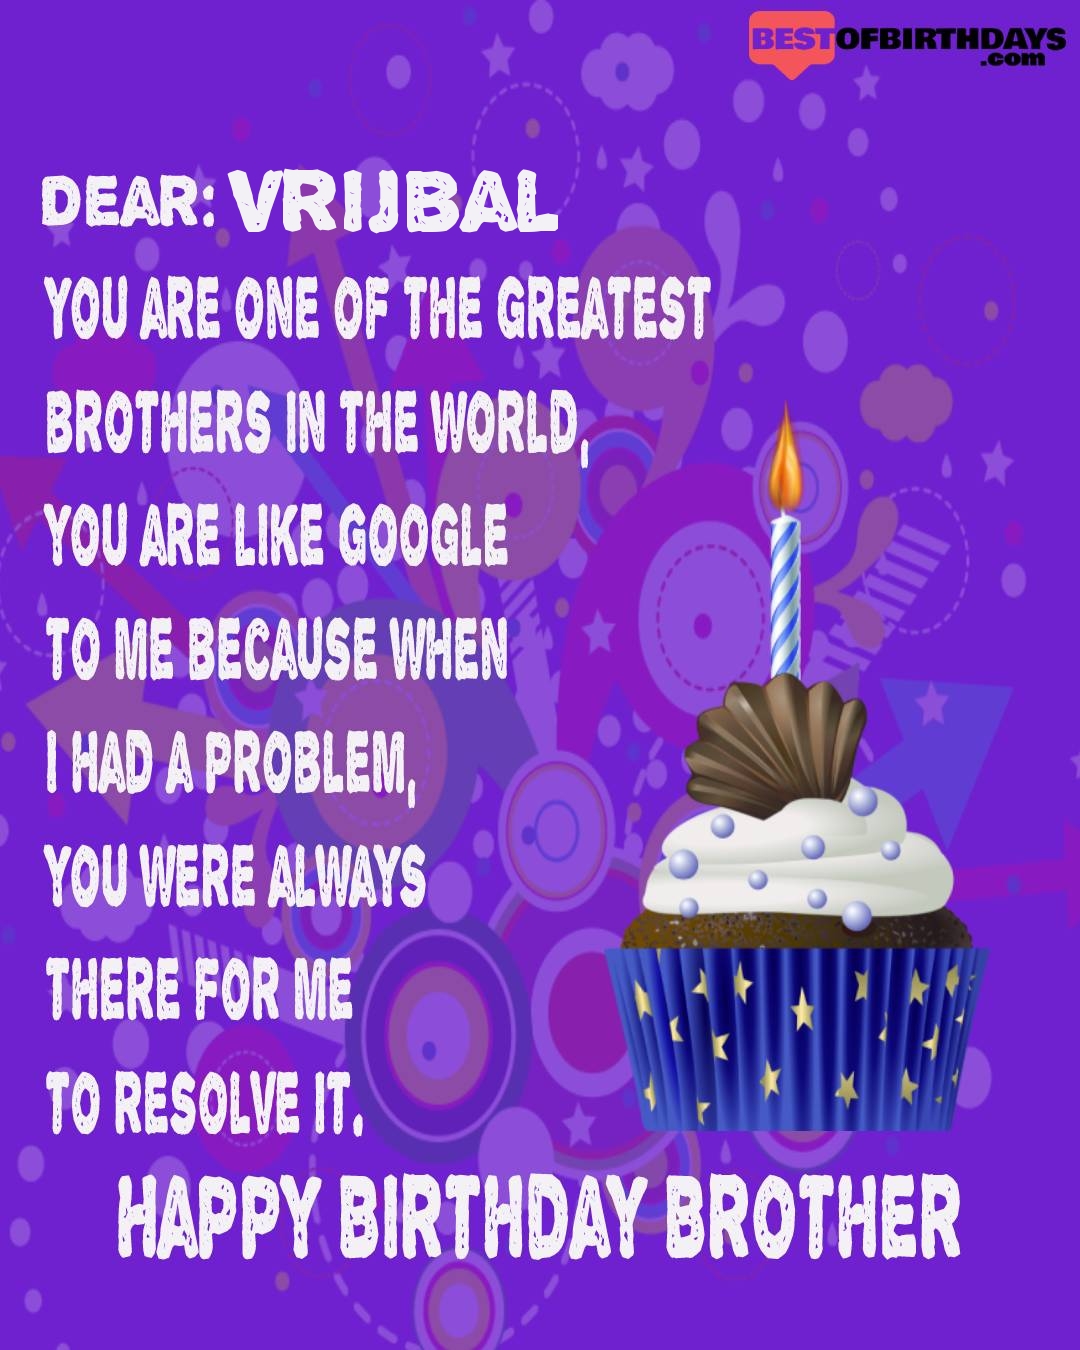 Happy birthday vrijbal bhai brother bro